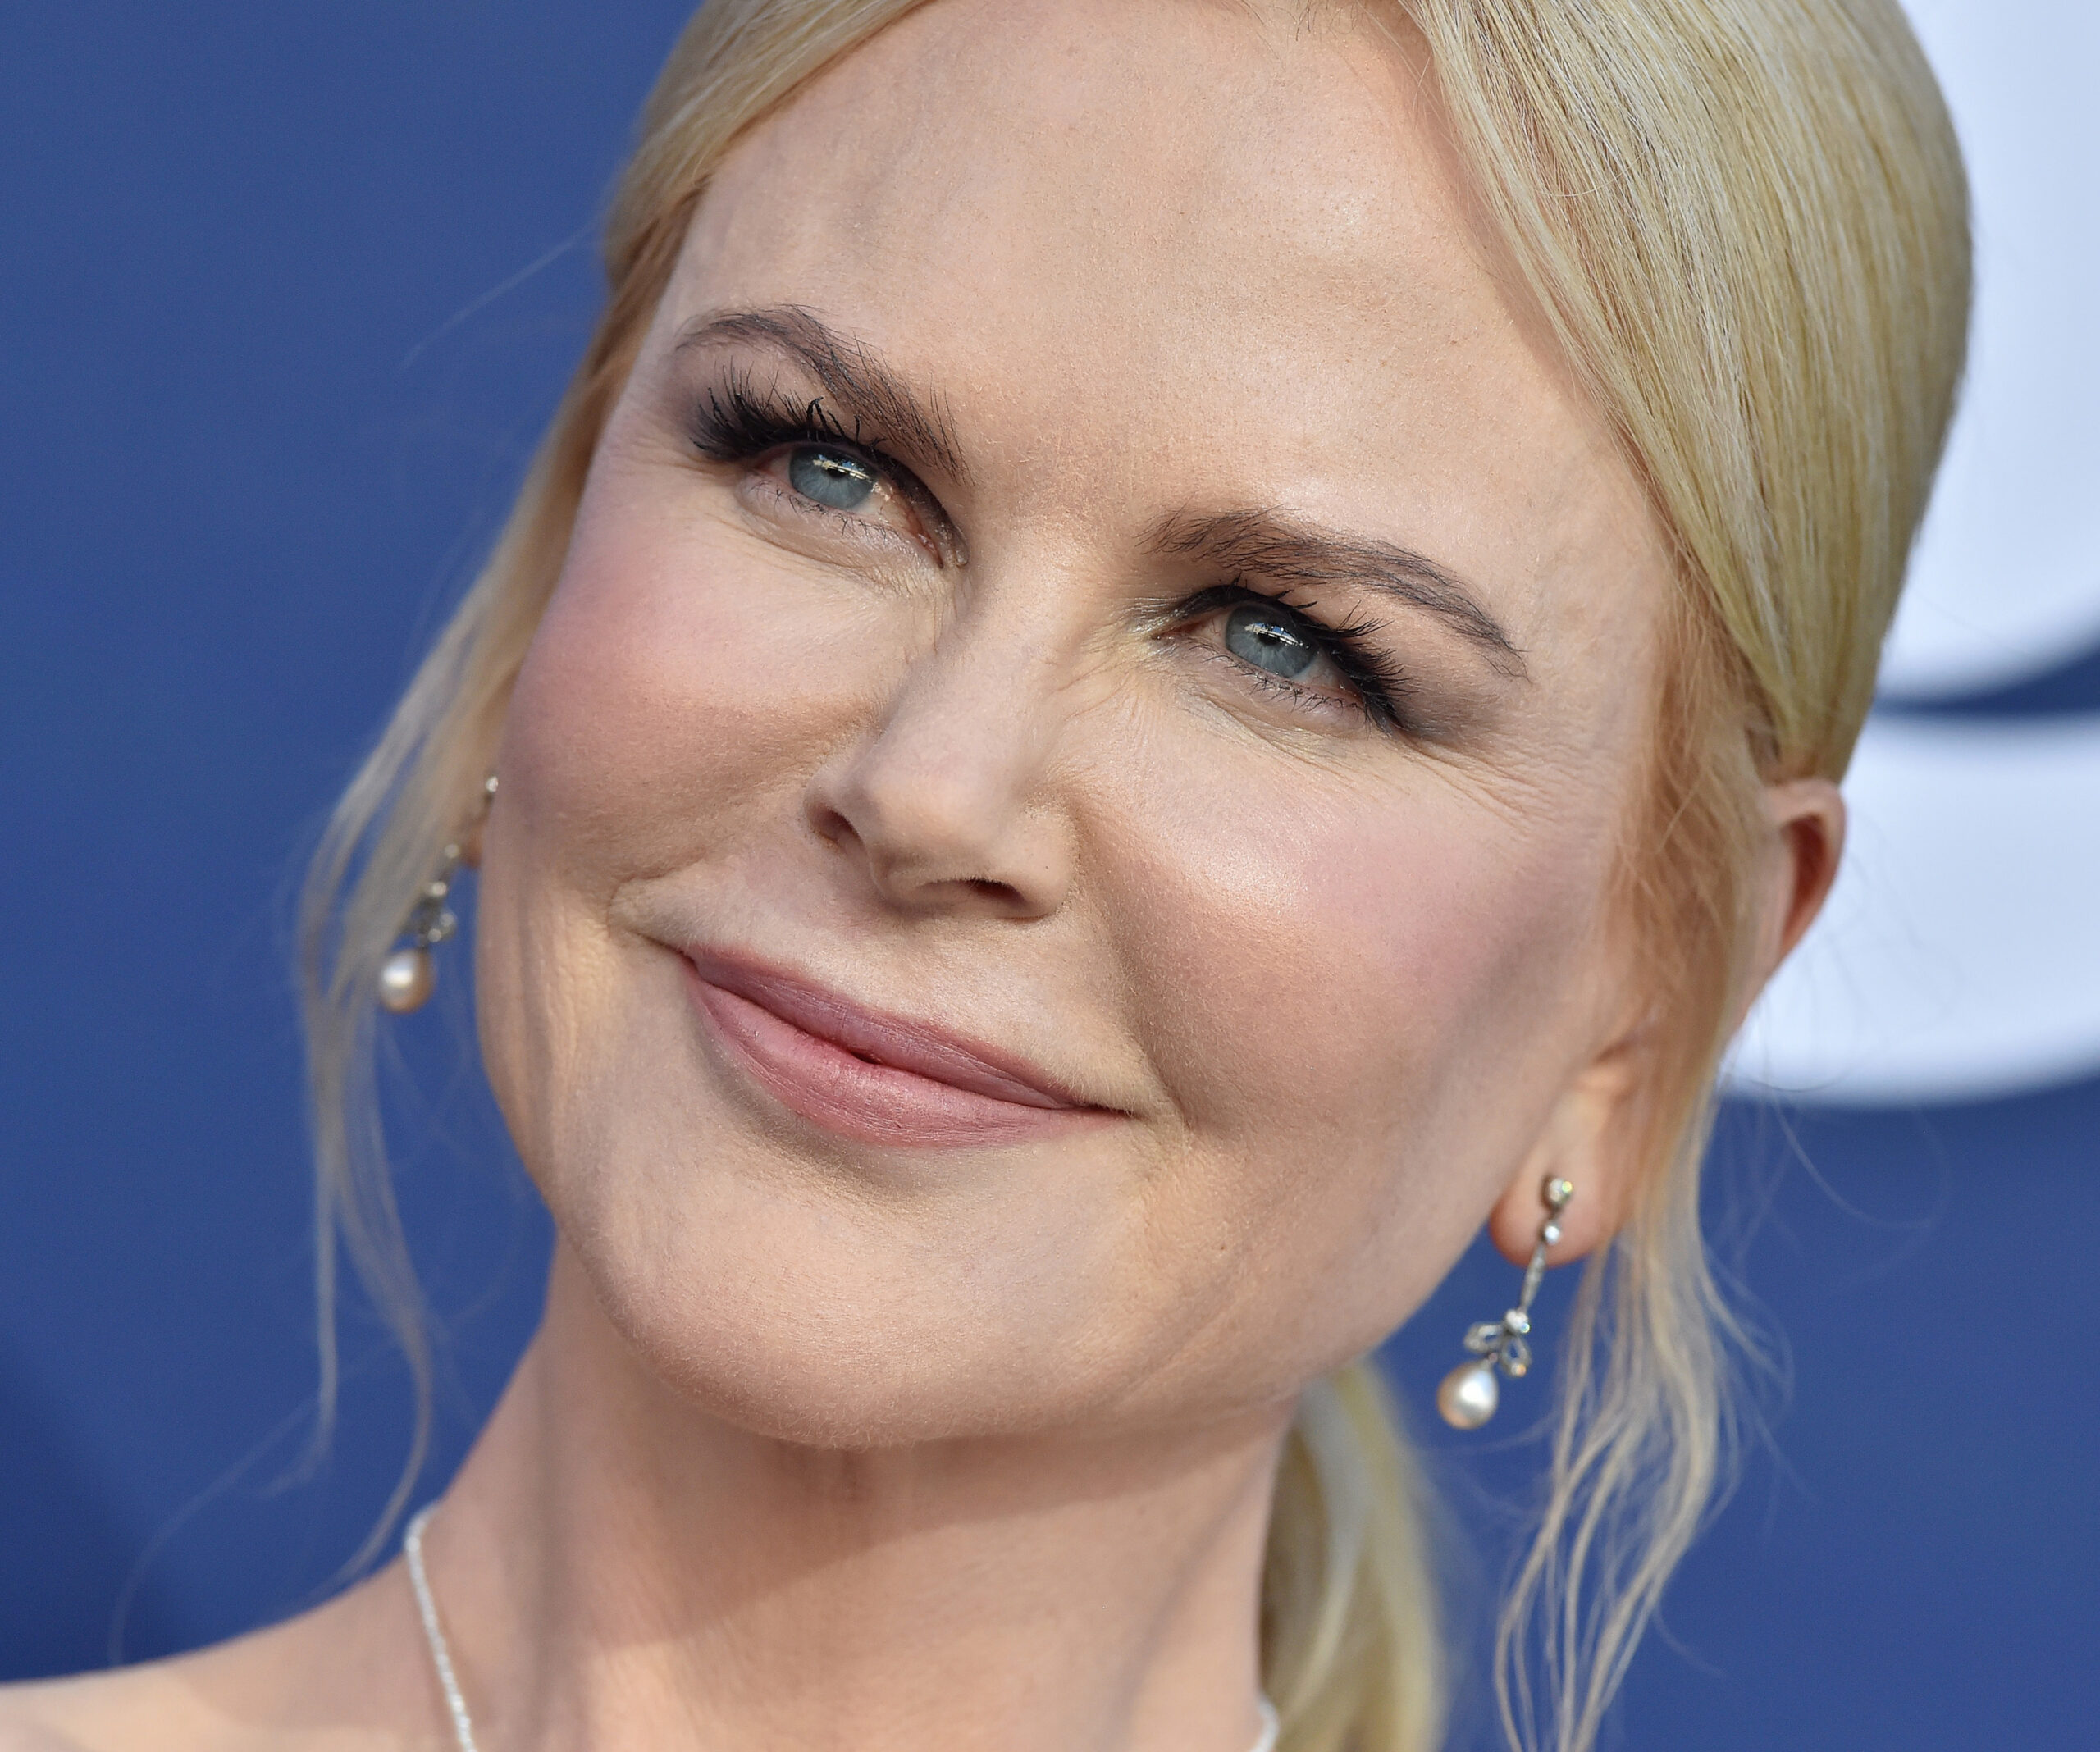 The $18 supermarket beauty product Nicole Kidman uses everyday